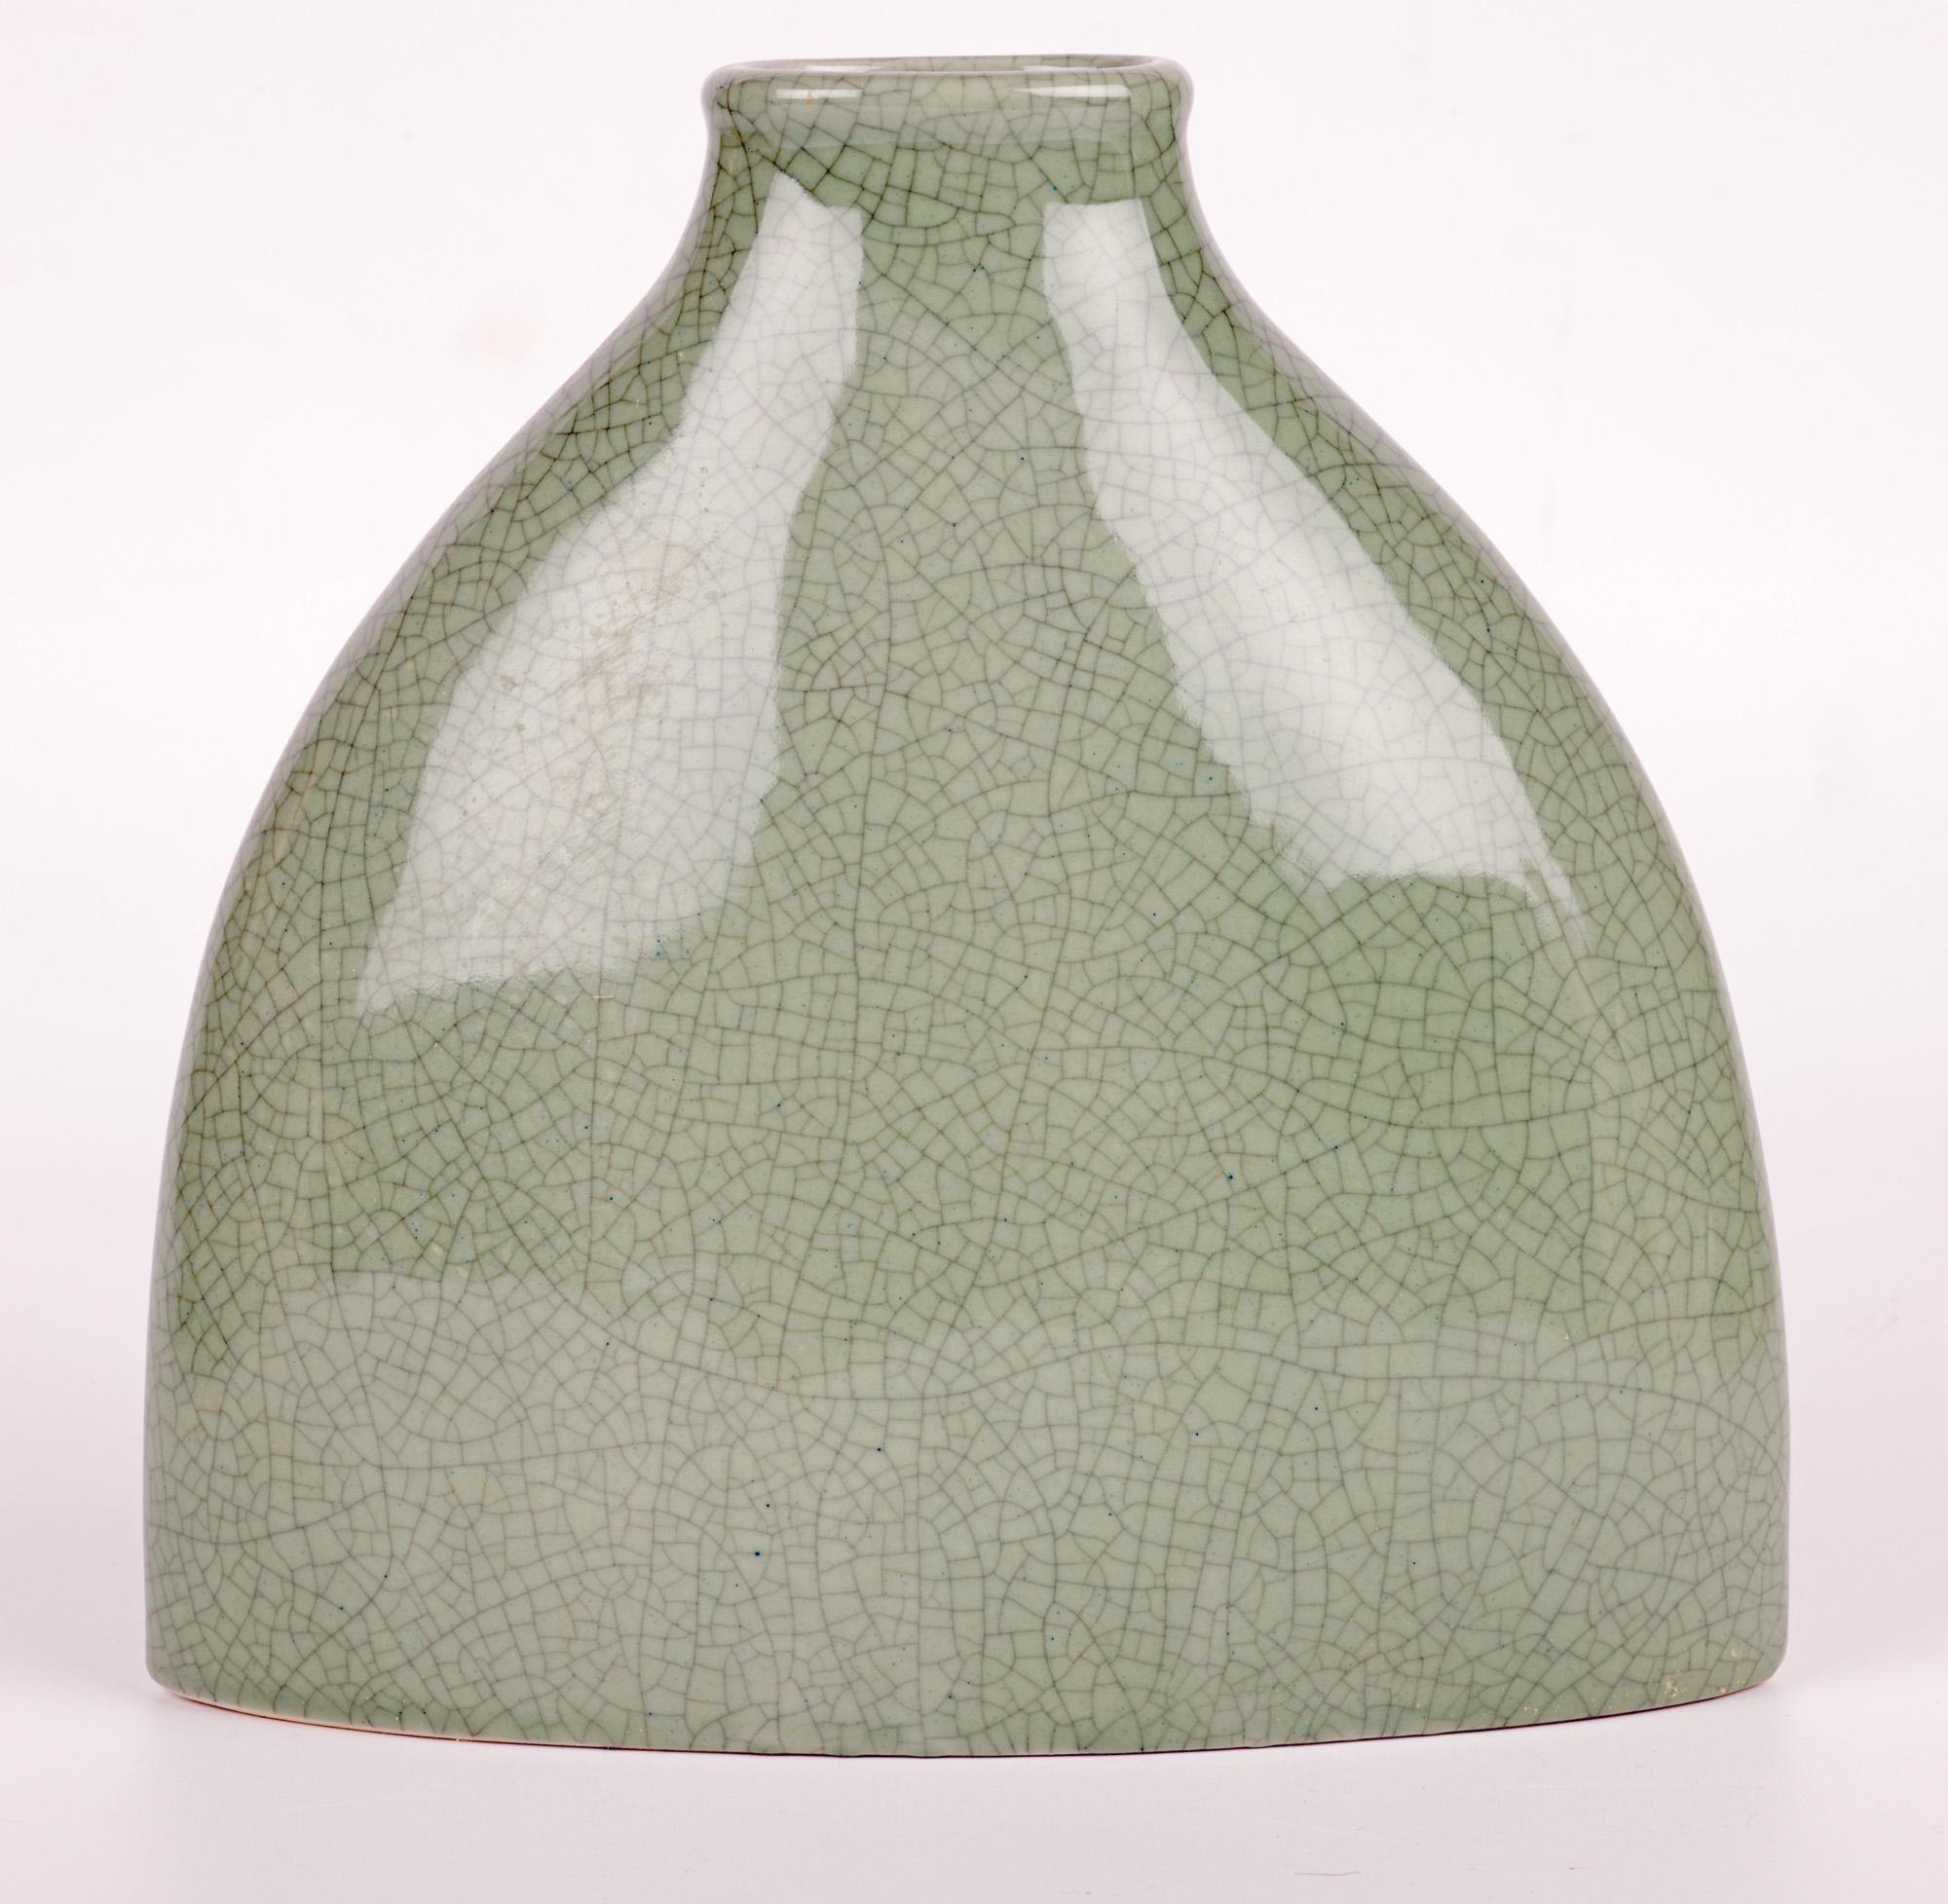 South East Asian Porcelain Celadon Glazed Craquelure Bottle Vase For Sale 4